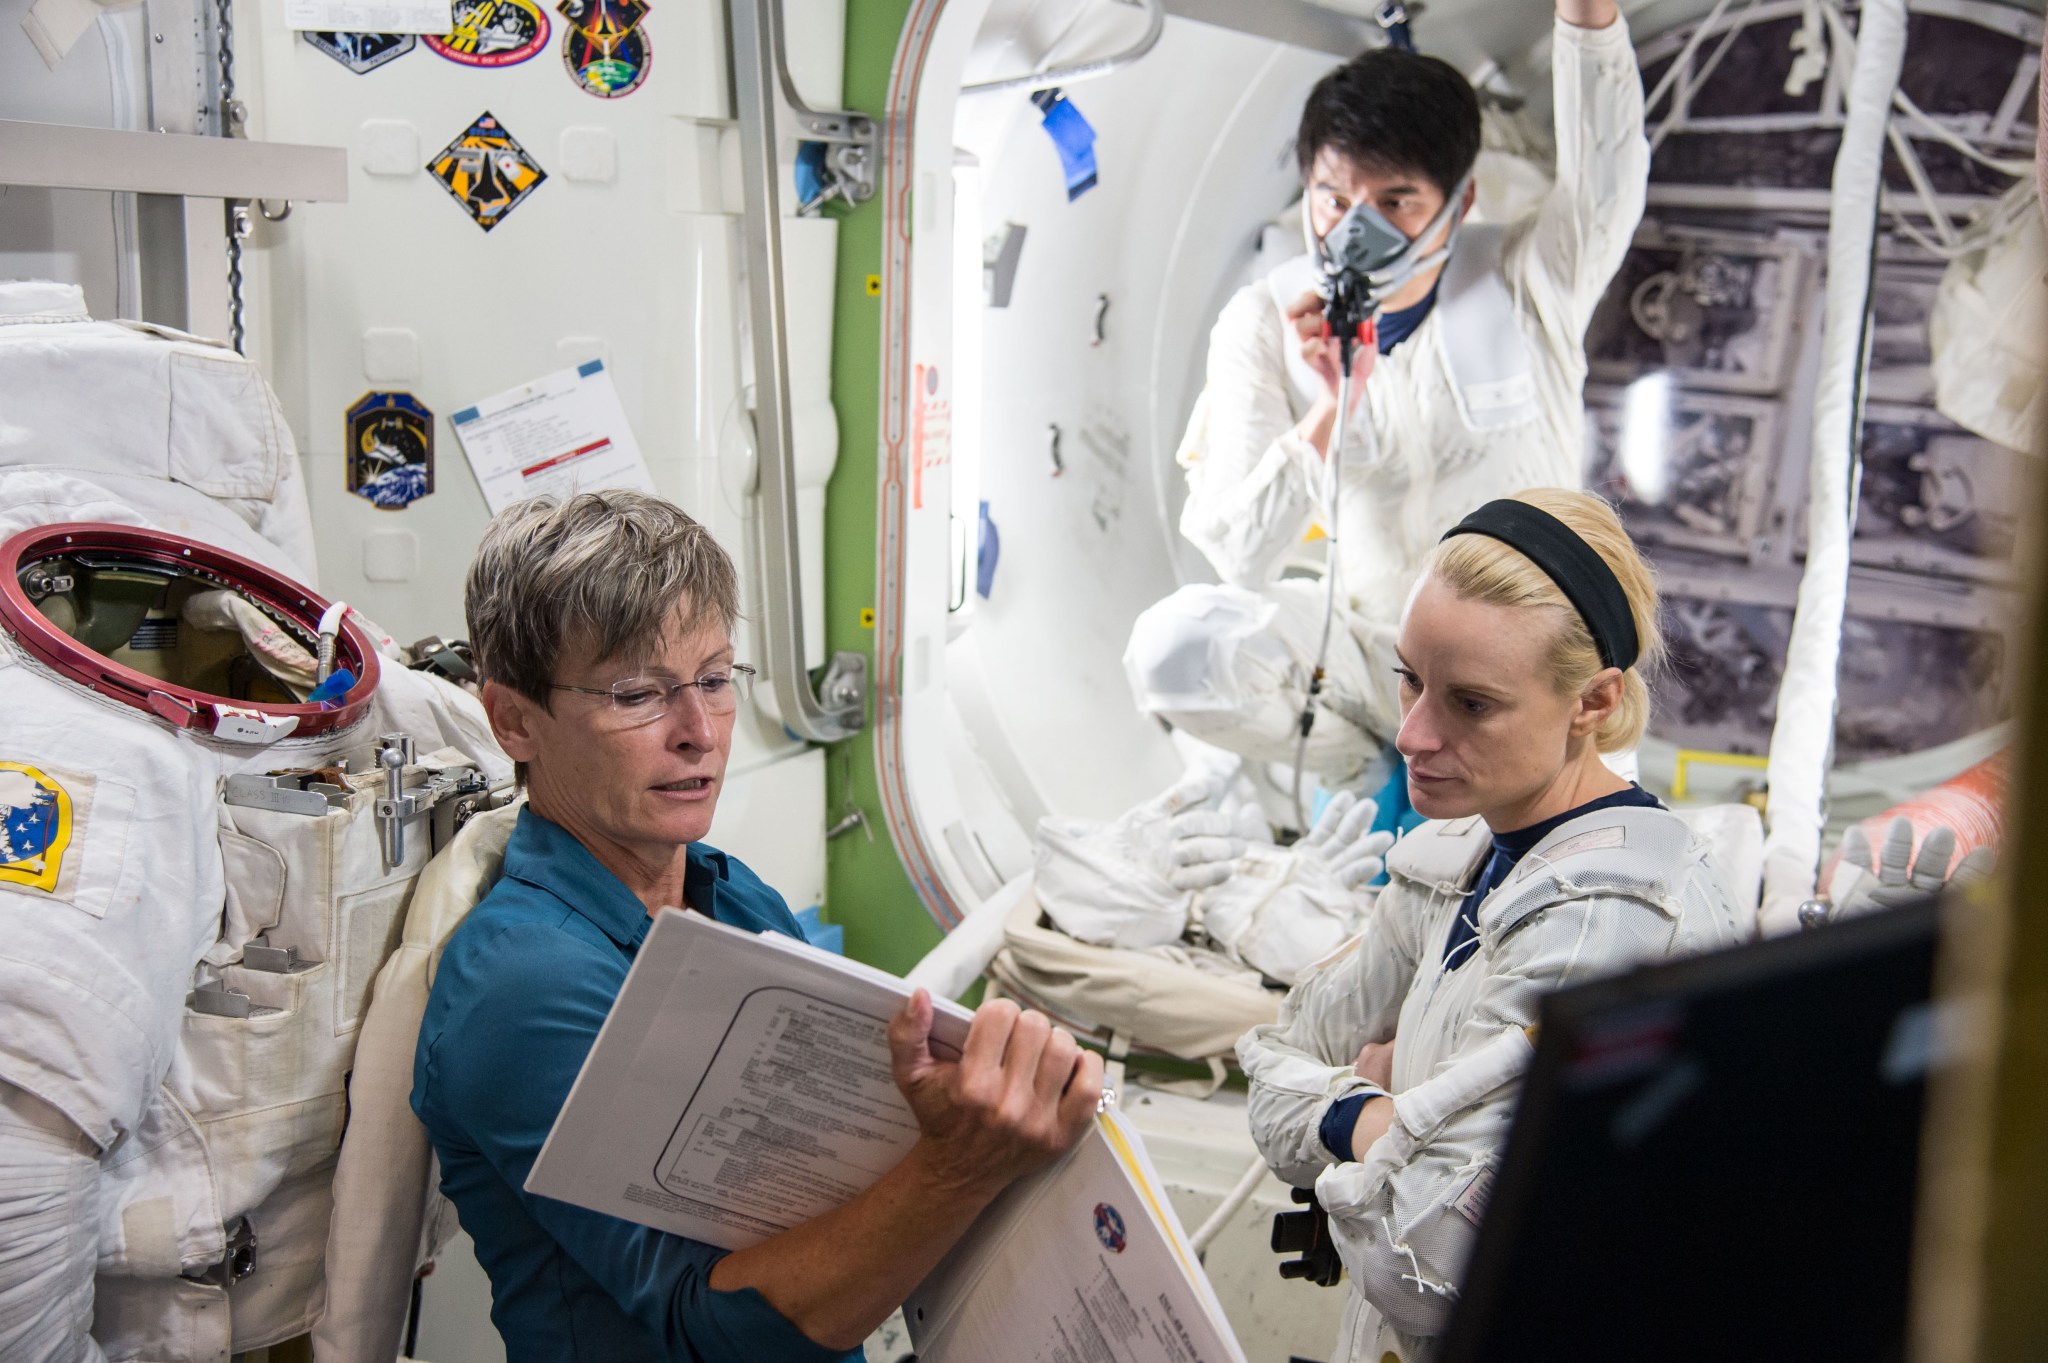 NASA astronauts Peggy Whitson and Kate Rubins, and astronaut Takuya Onishi of the Japan Aerospace Exploration Agency